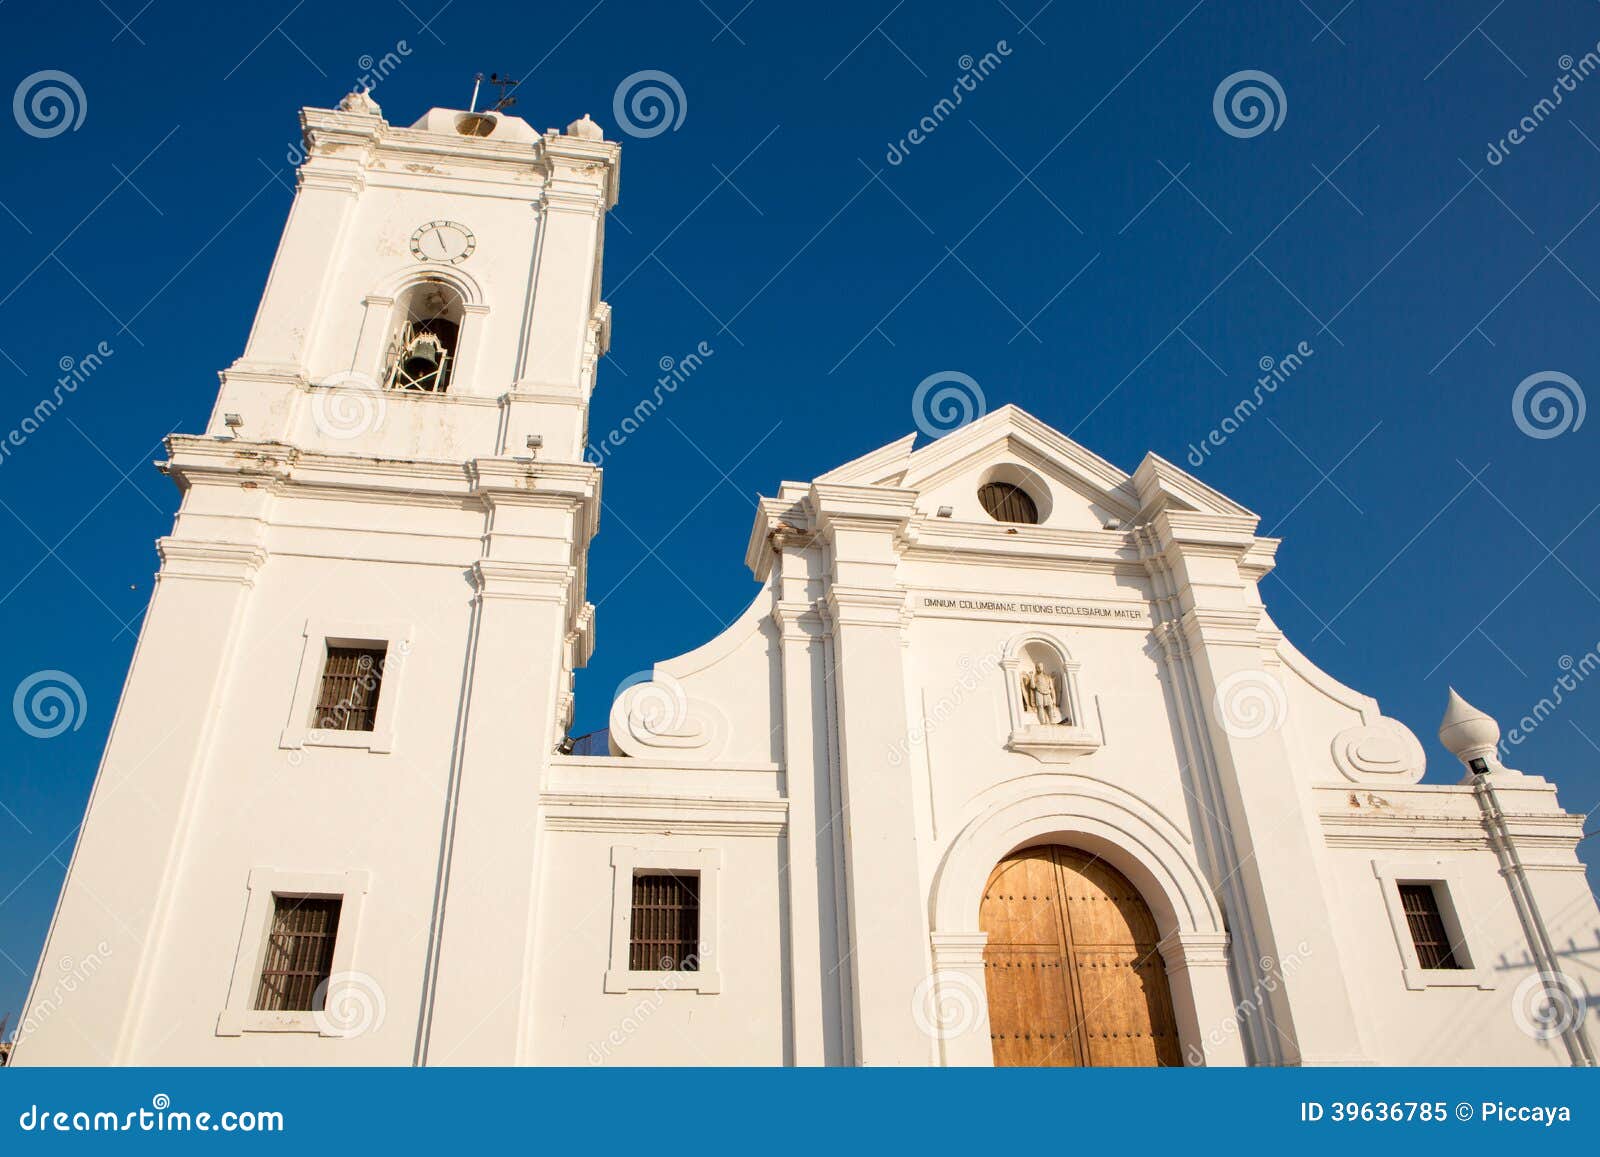 cathedral of santa marta, colombia